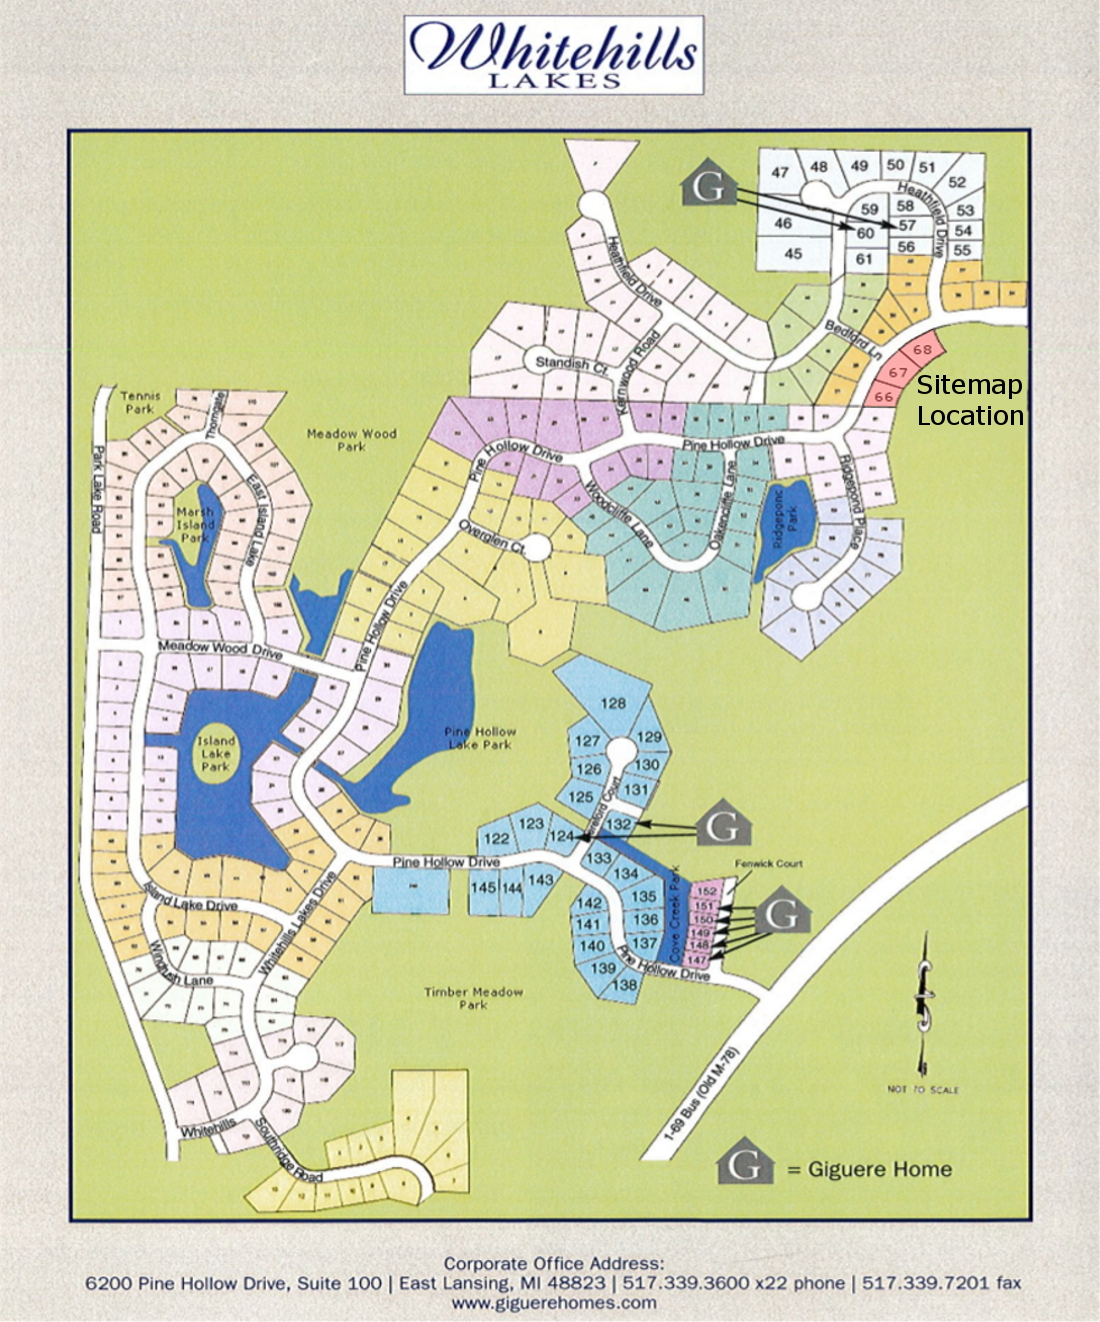 Whitehills Lakes Sitemap